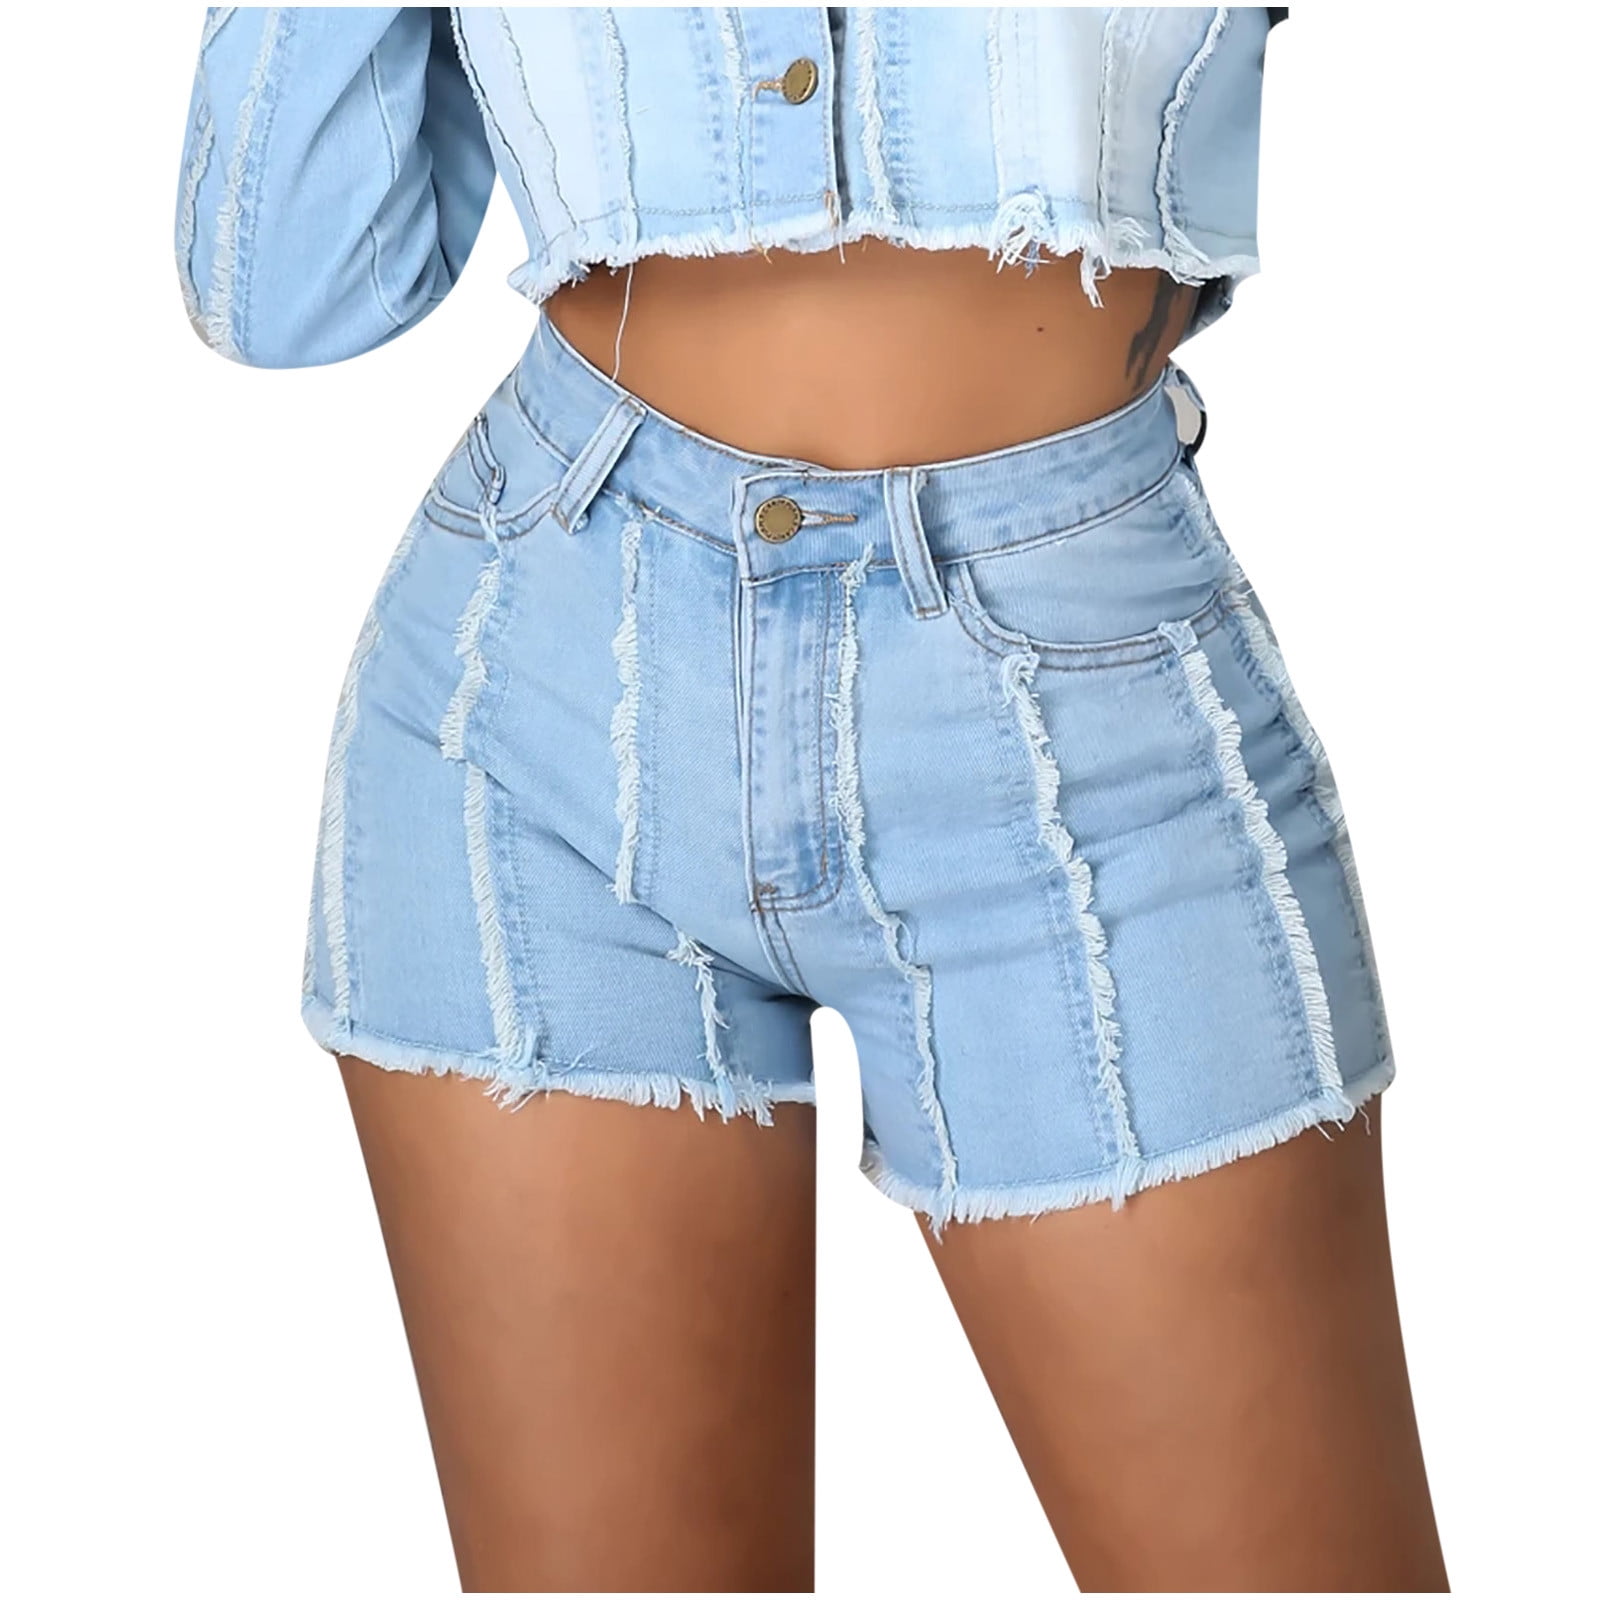 summer sexy hot shorts washed jeans| Alibaba.com